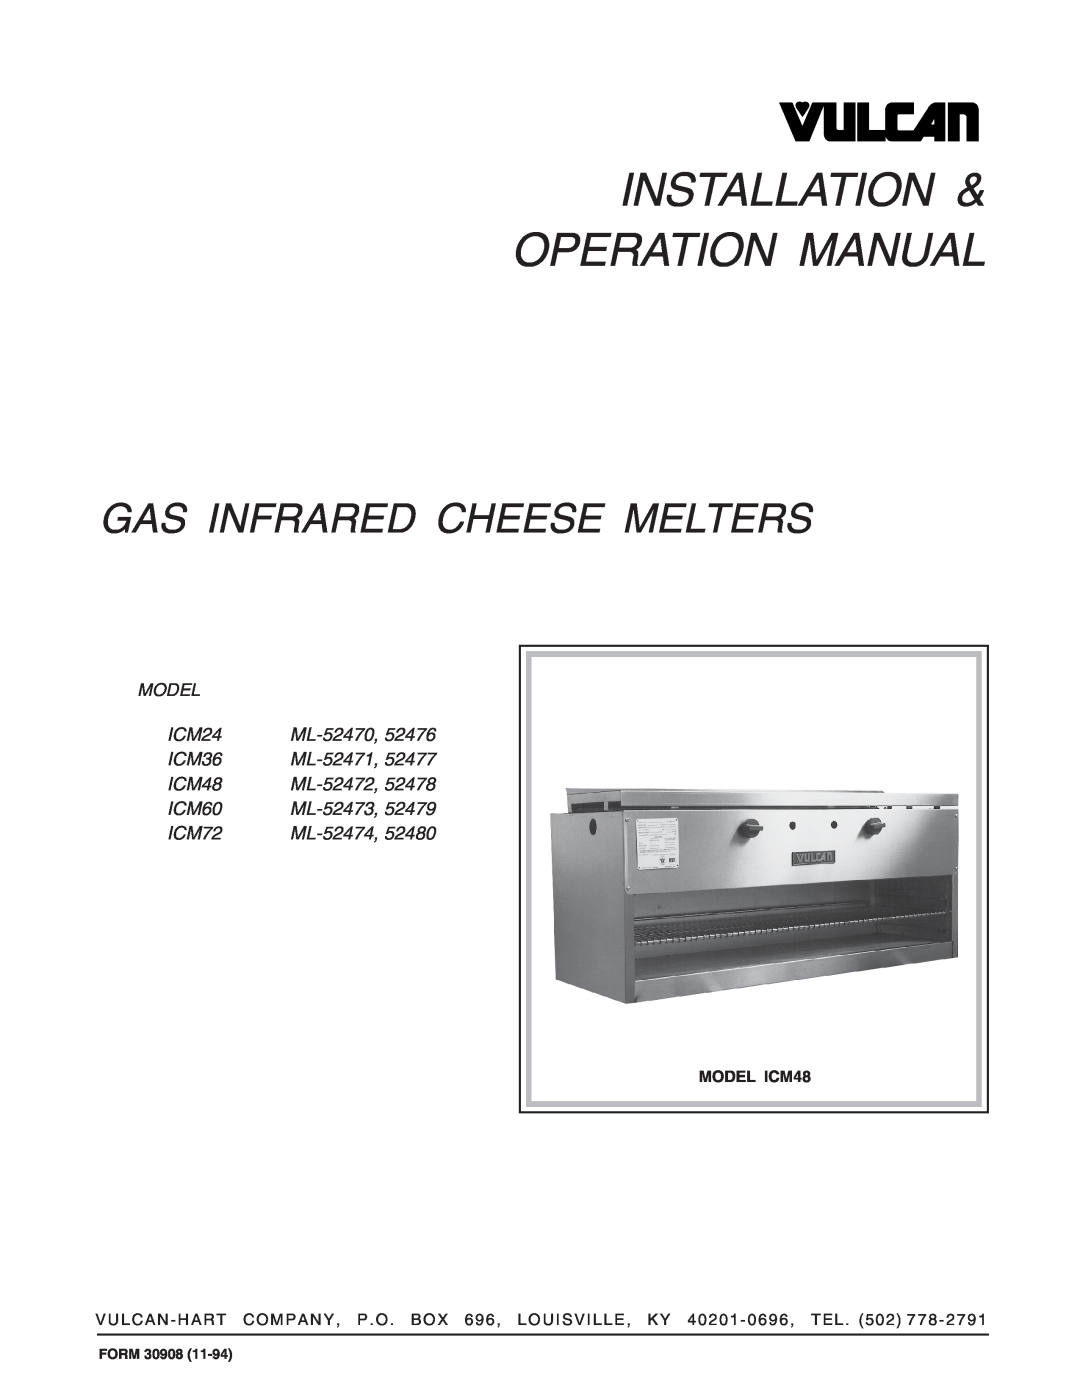 Vulcan-Hart 52480 operation manual Gas Infrared Cheese Melters, ICM24, ICM36, ICM48, ICM60, ICM72, Model, ML-52470,52476 